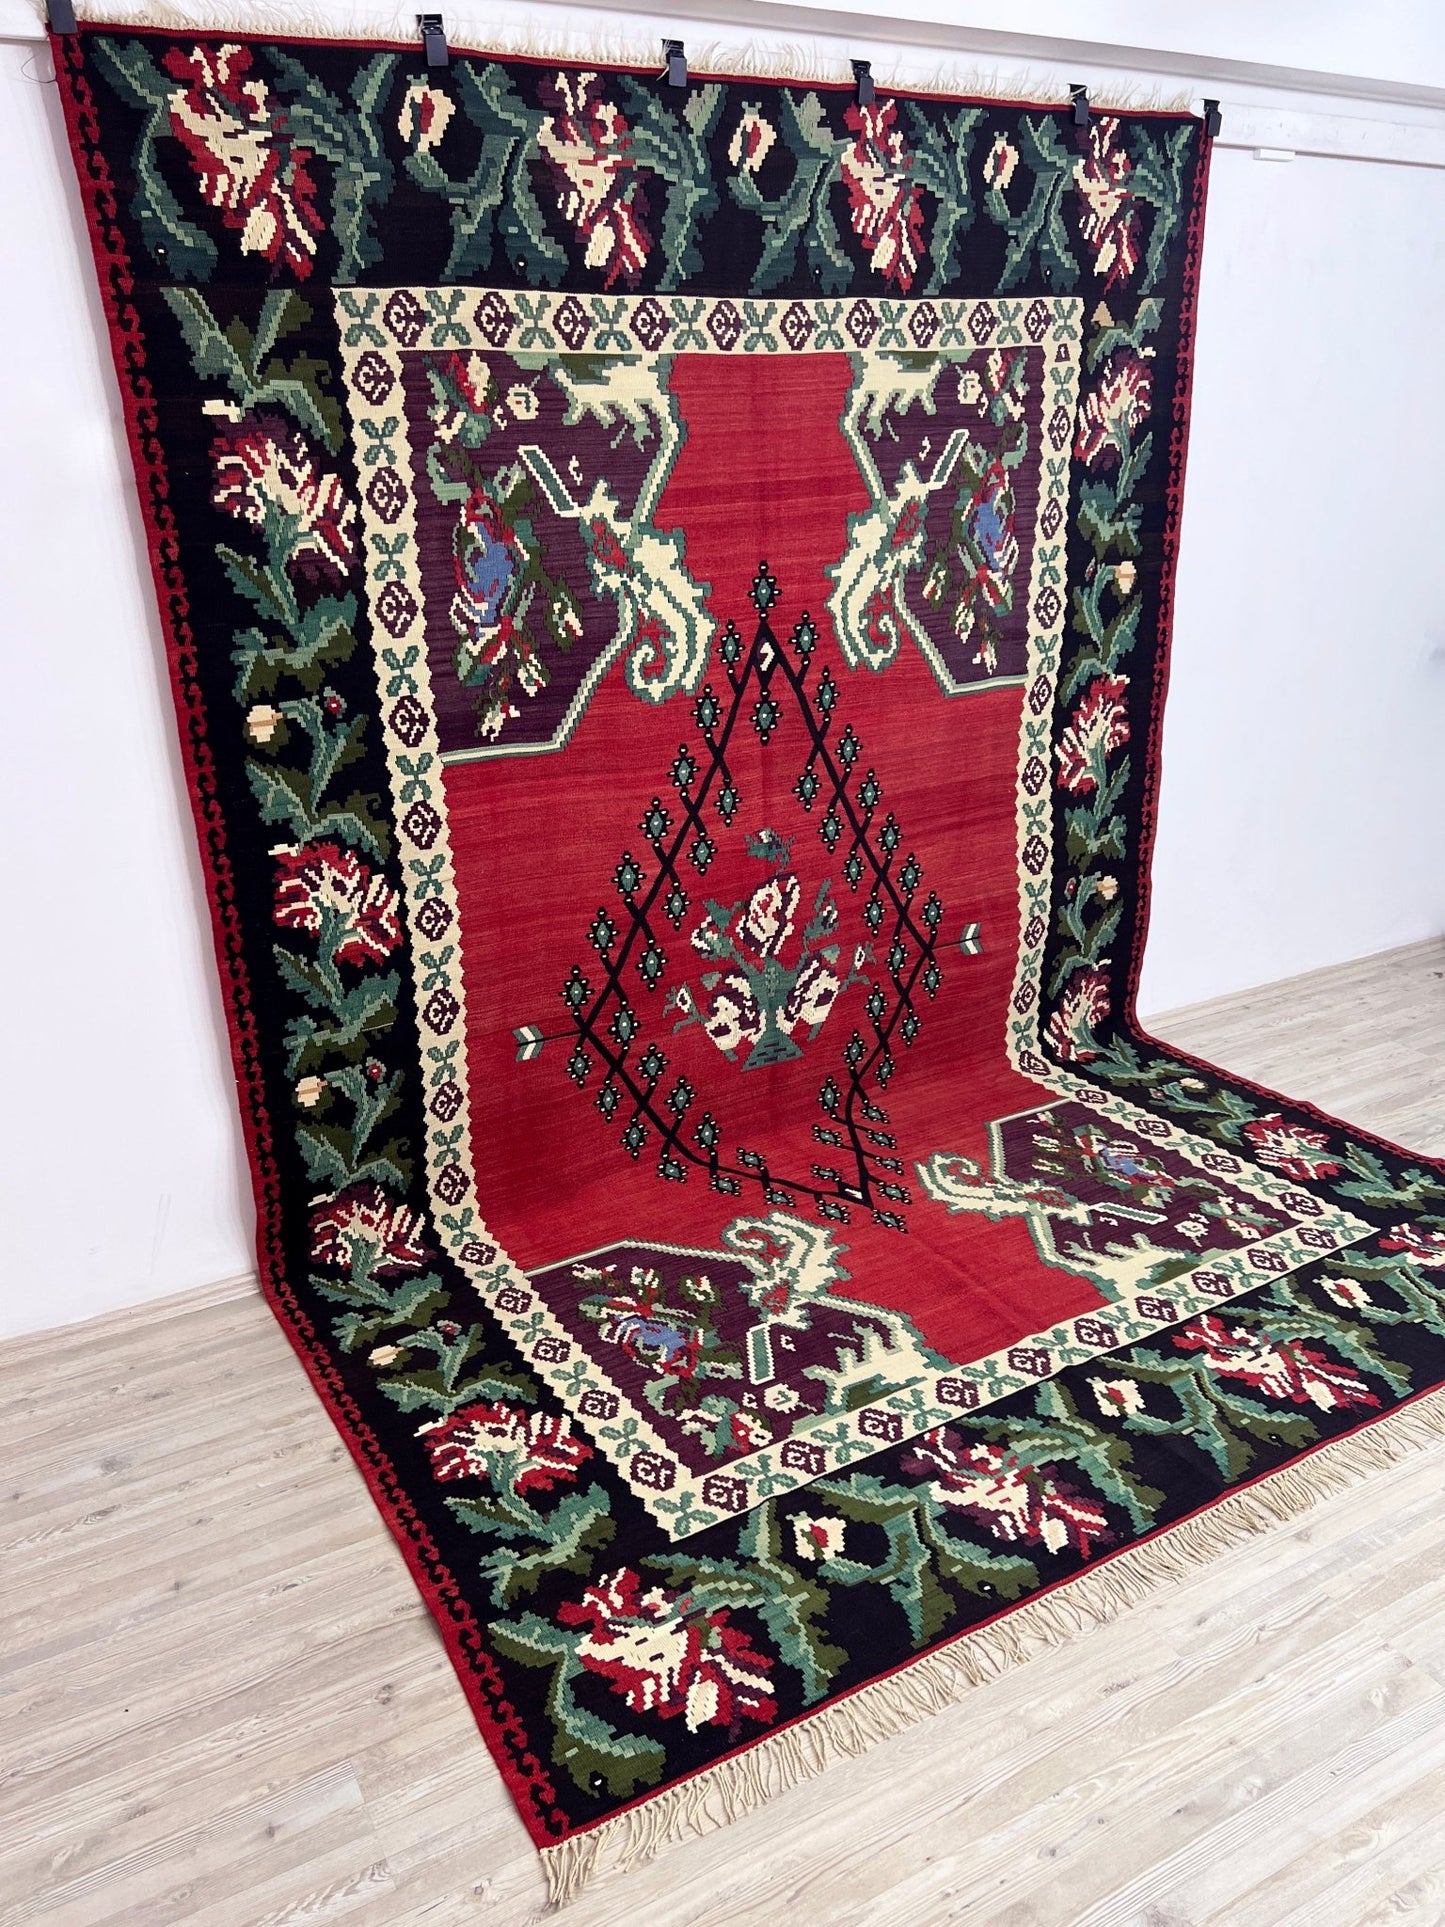 turkish rug store anatolian bessarabian kilim rug shop san francisco bay area online rug shopping store berkeley palo alto